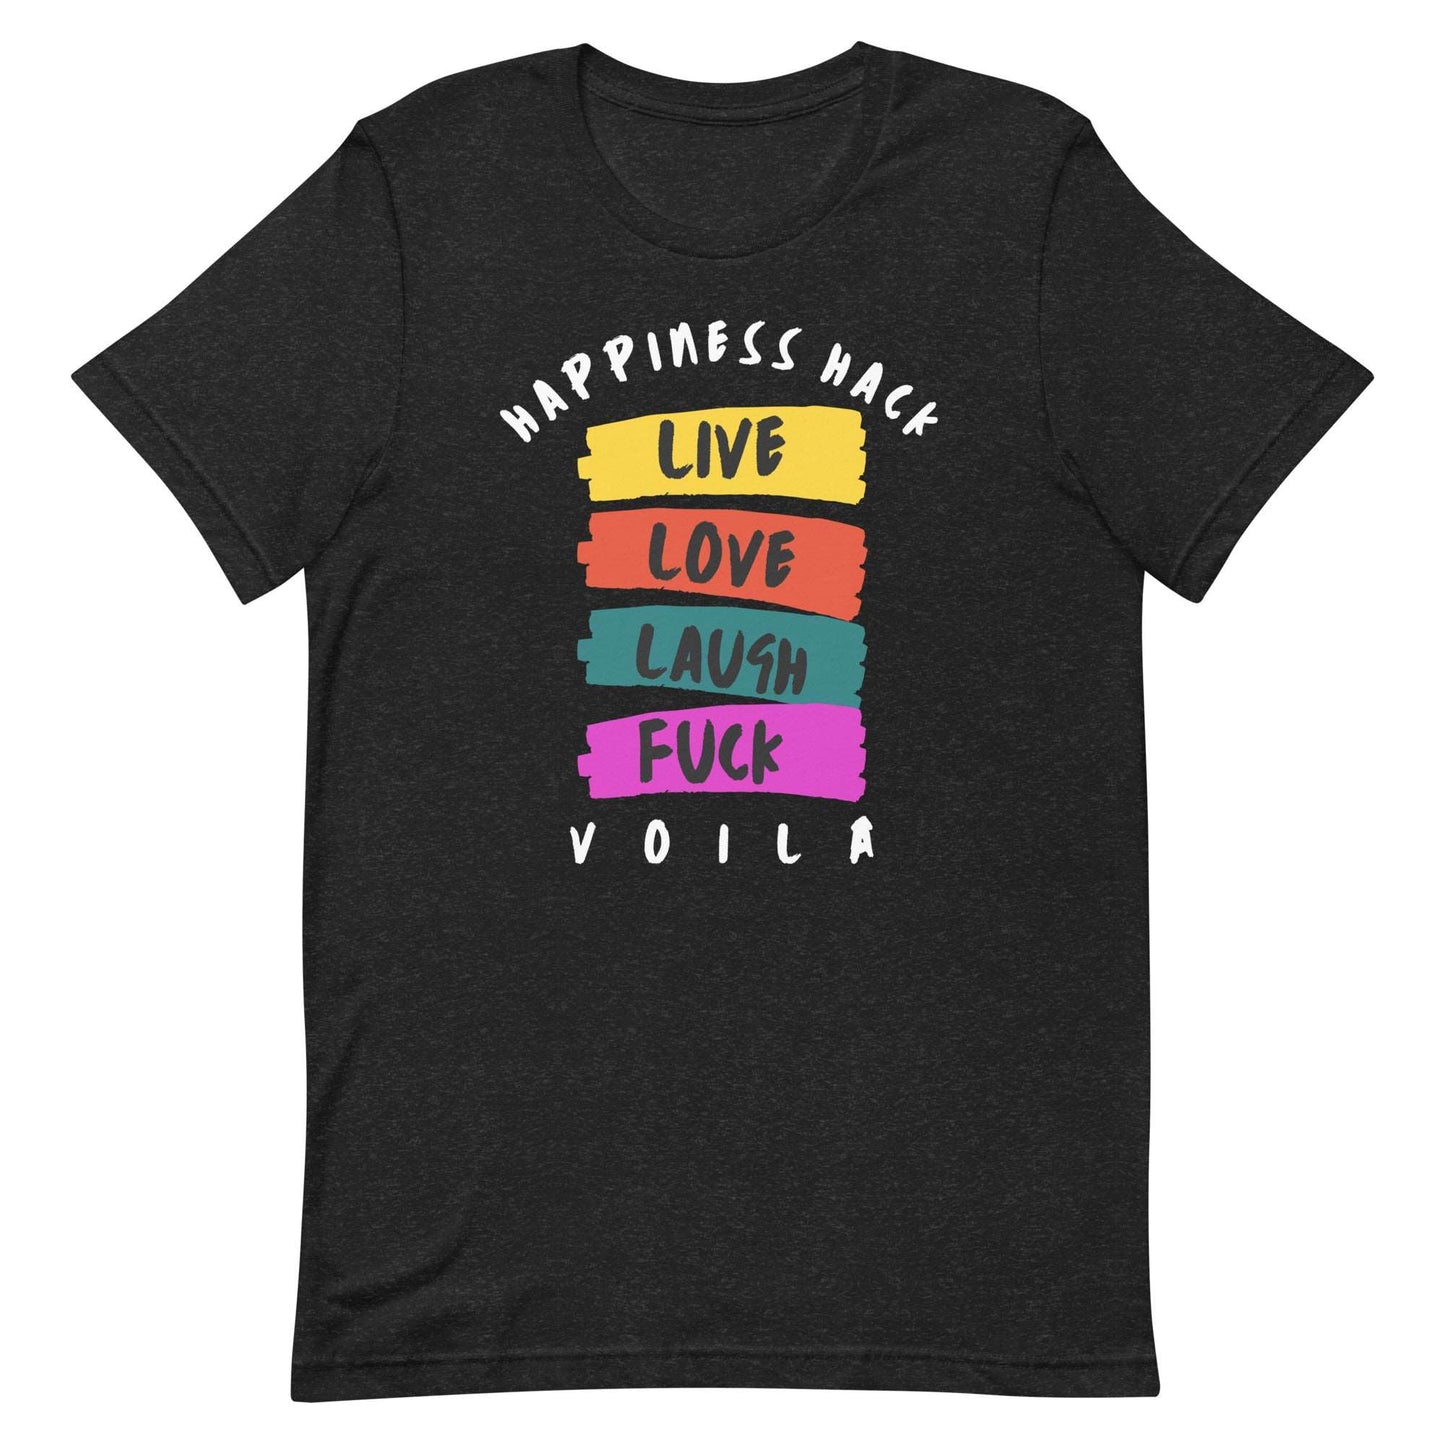 LIVE & LOVE - Unisex t-shirt